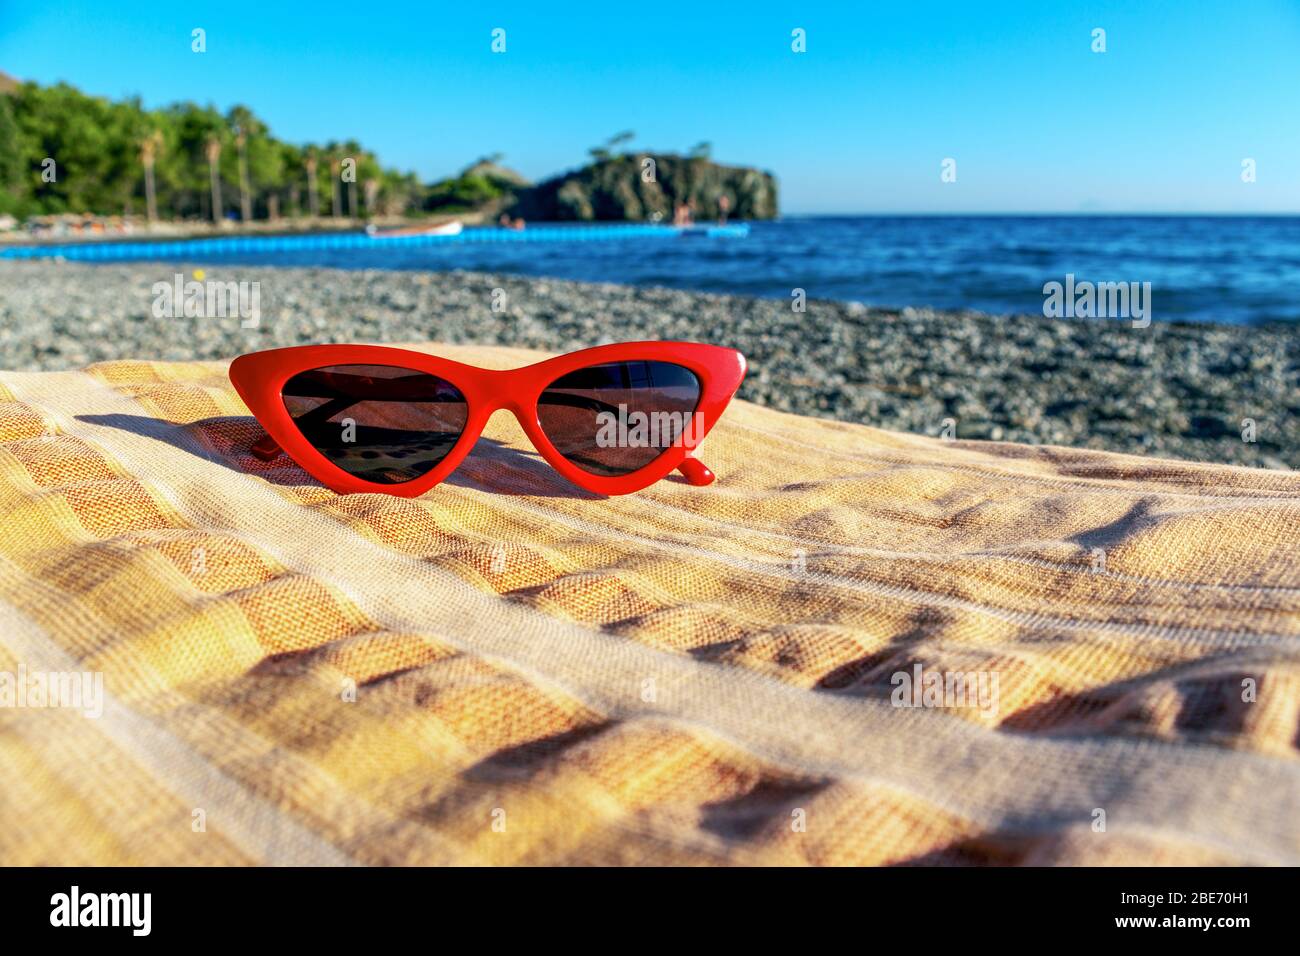 Cat Eye Sunglasses, Beach Glasses